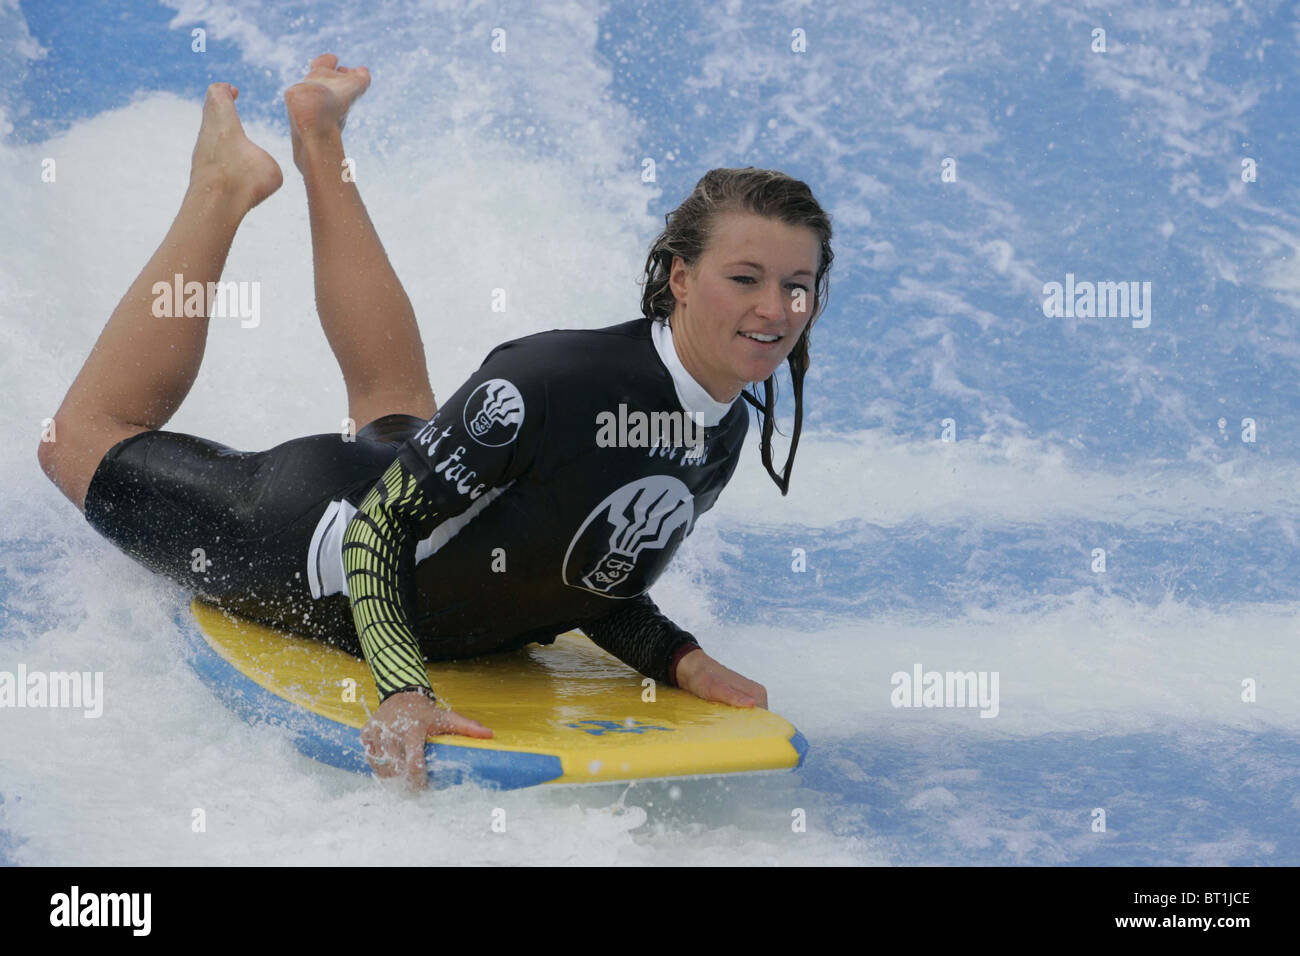 Pro surfer Emma Skinner. Picture by James Boardman. Stock Photo